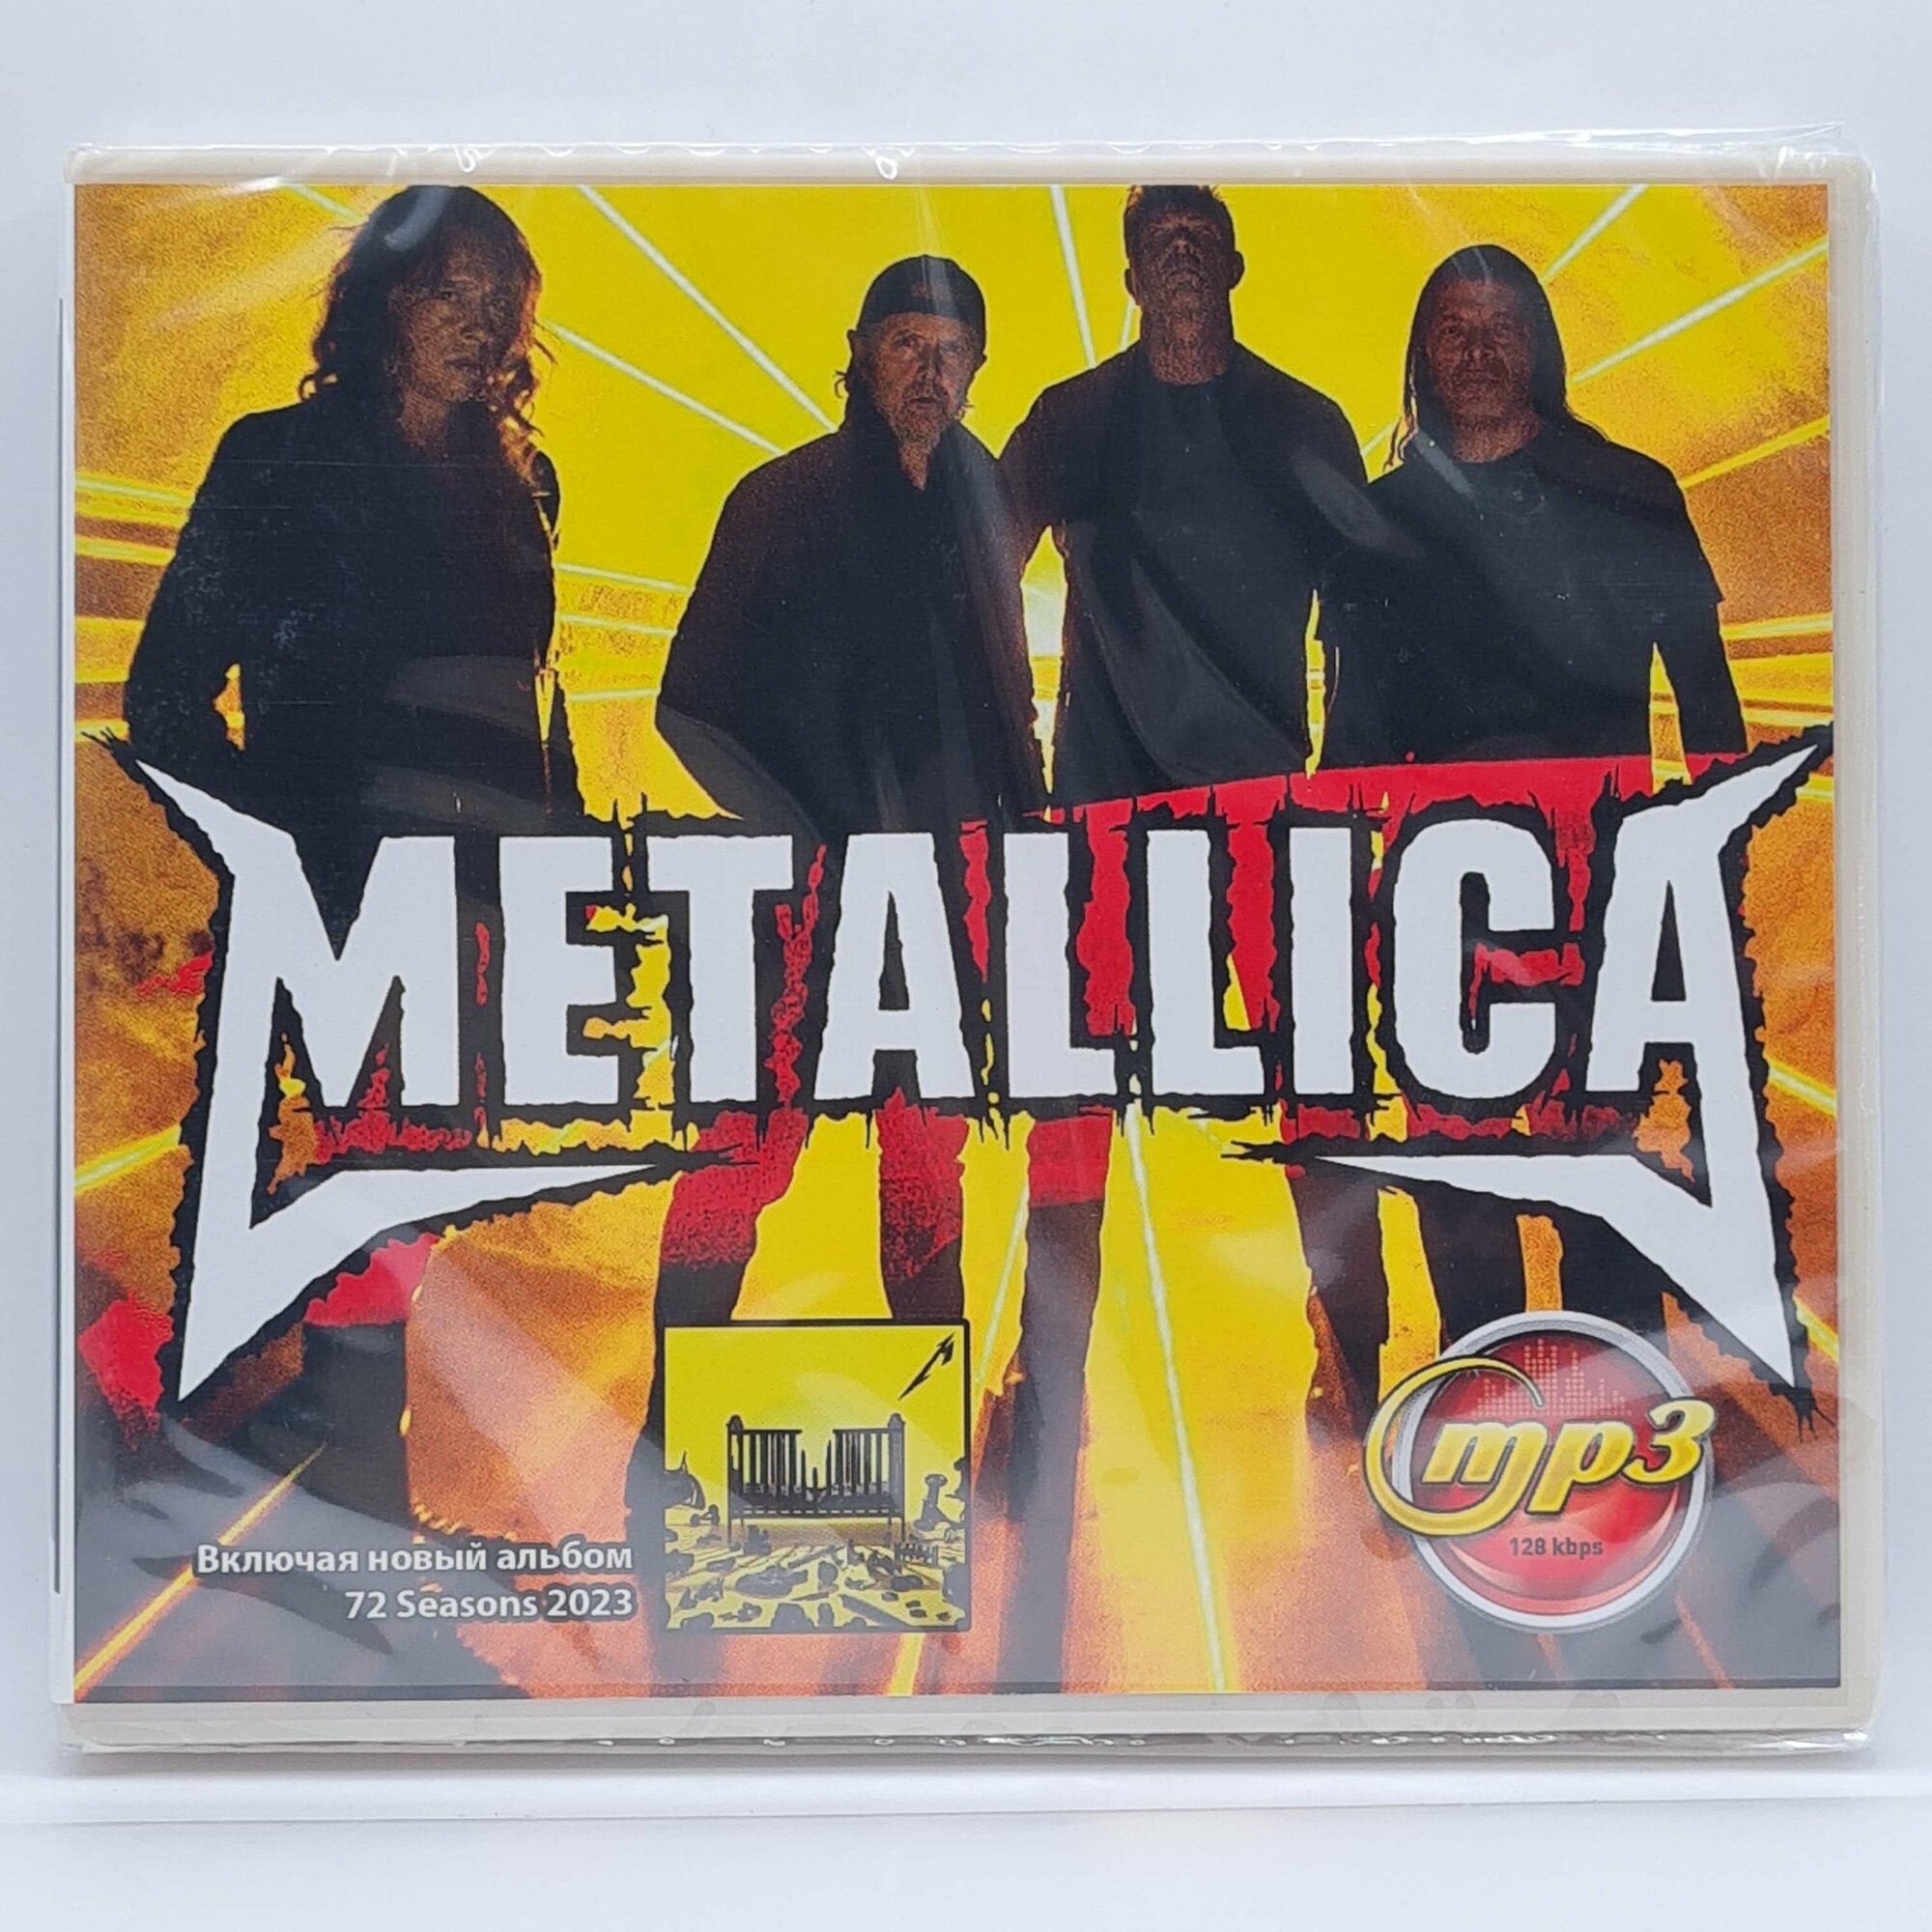 Metallica (MP3)